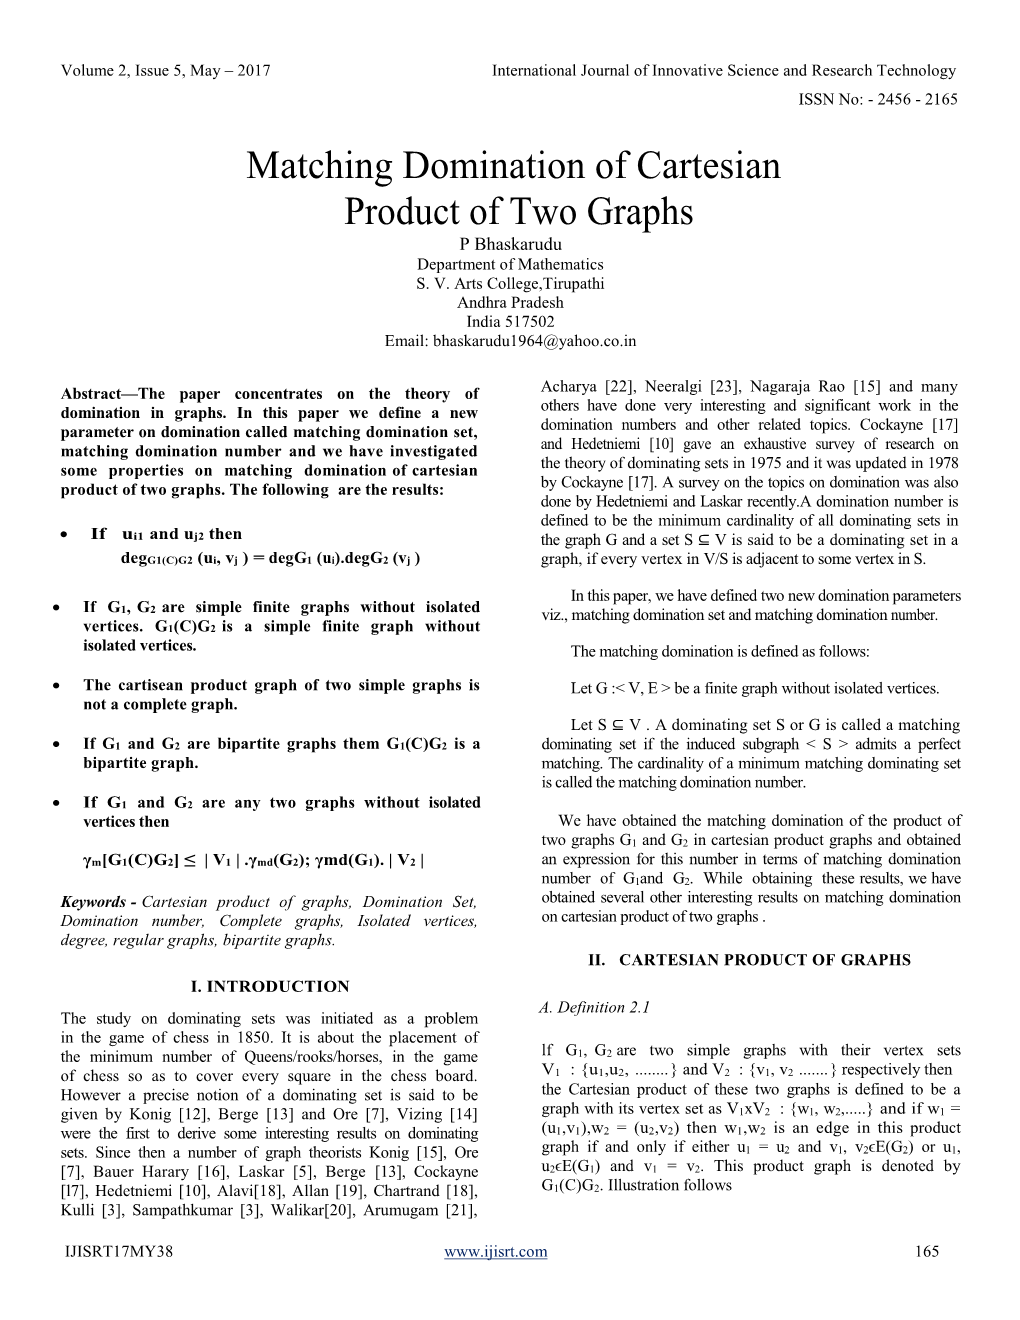 Matching Domination of Cartesian Product of Two Graphs P Bhaskarudu Department of Mathematics S